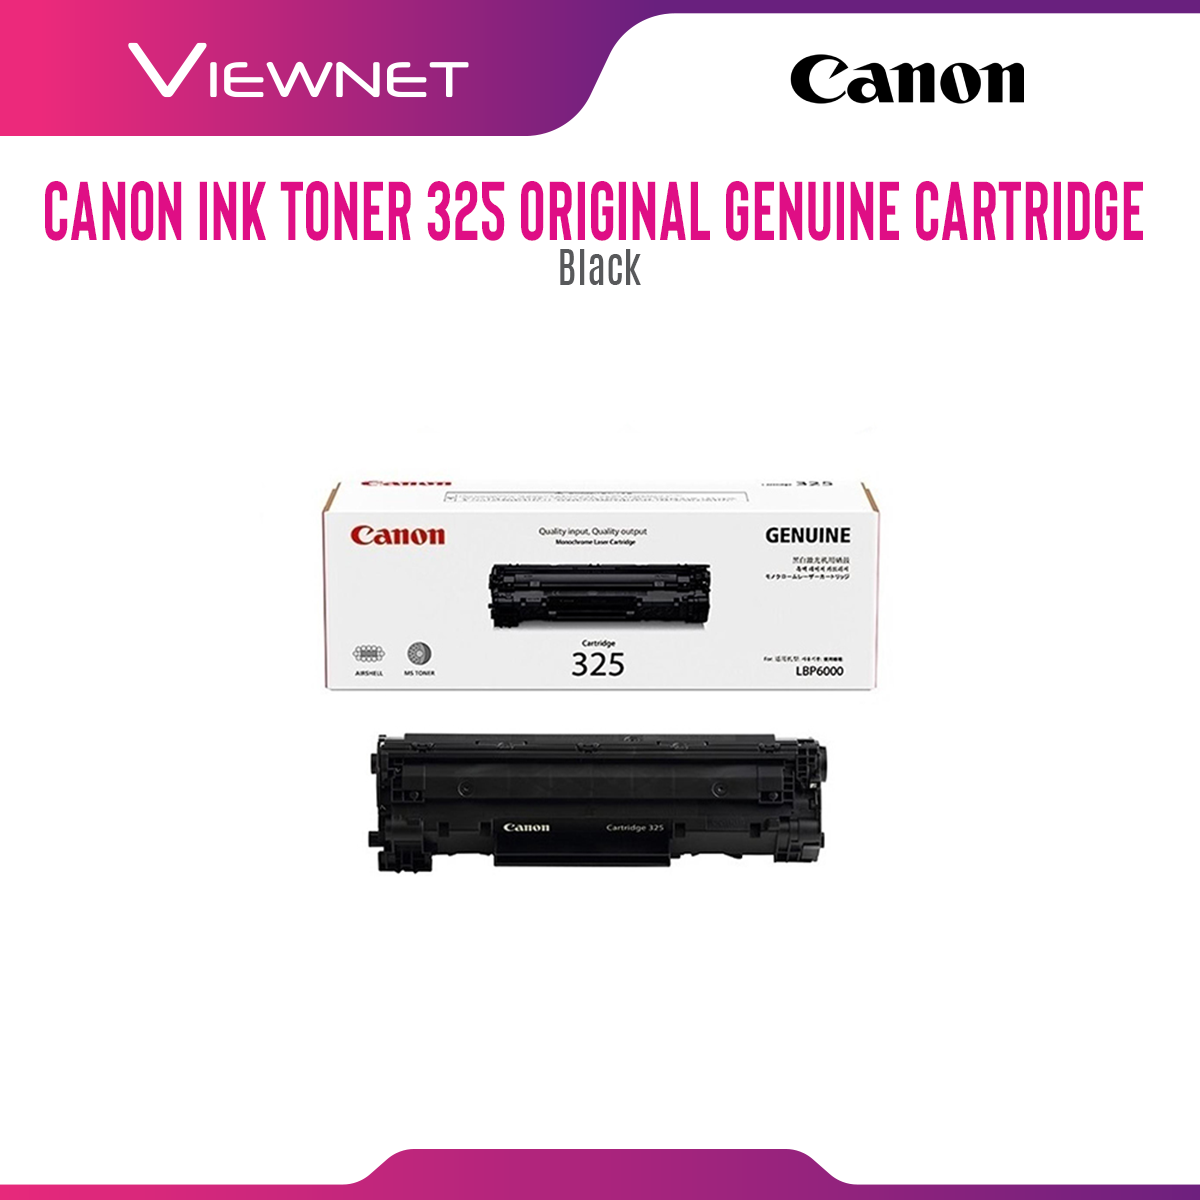 Canon 325 Original Genuine Ink Toner Black Toner Cartridge for ImageGLASS MF3010